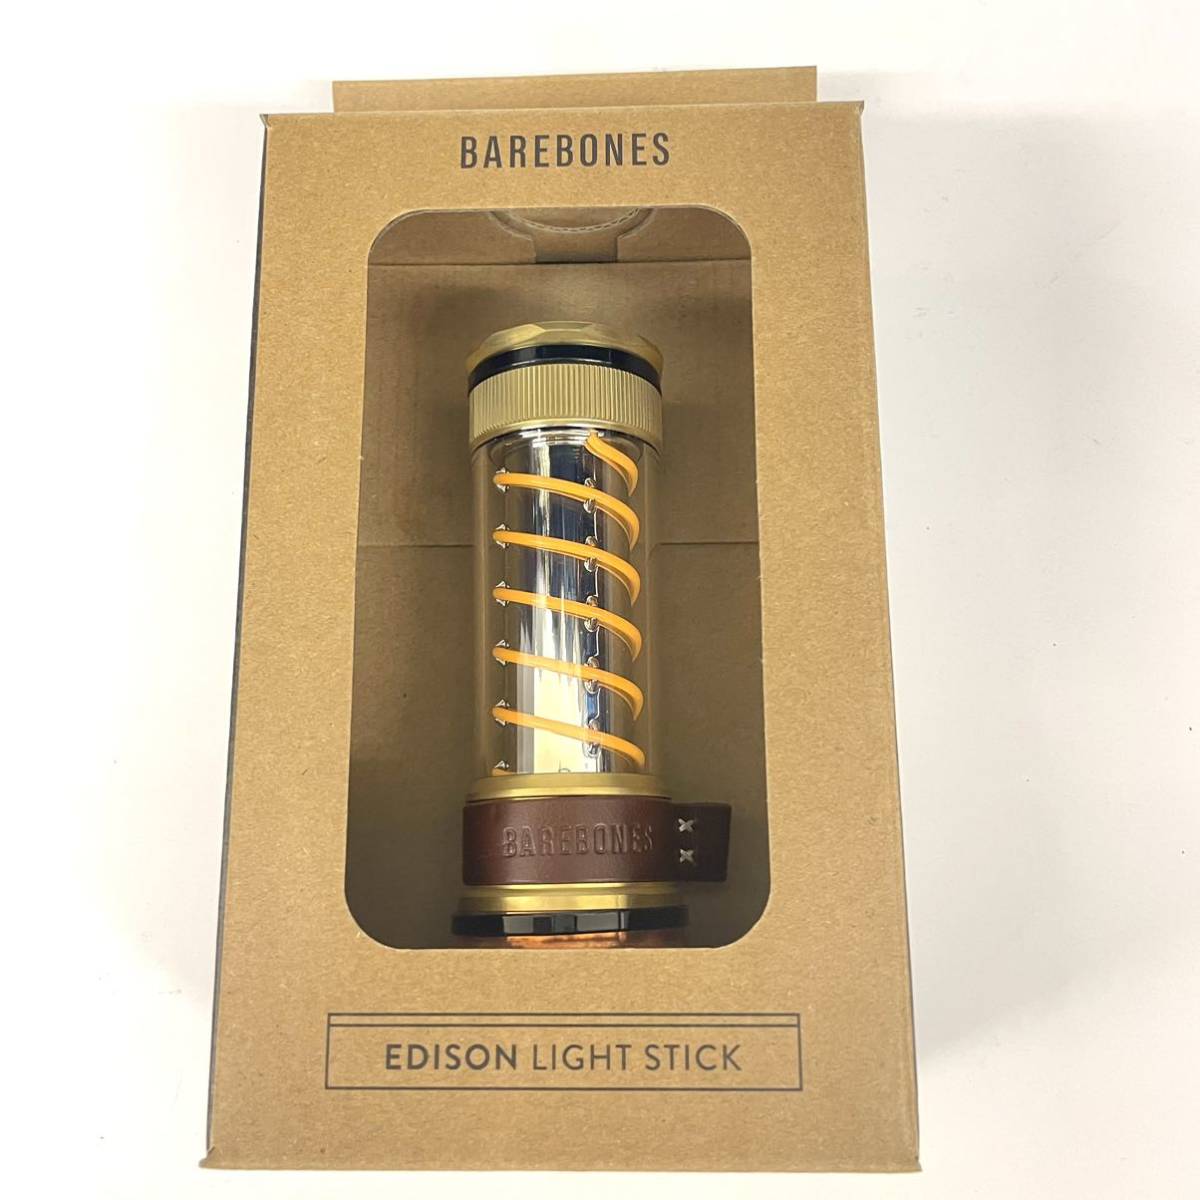 Barebones ベアボーンズ エジソンライトスティックLED 新品未使用 国内正規品